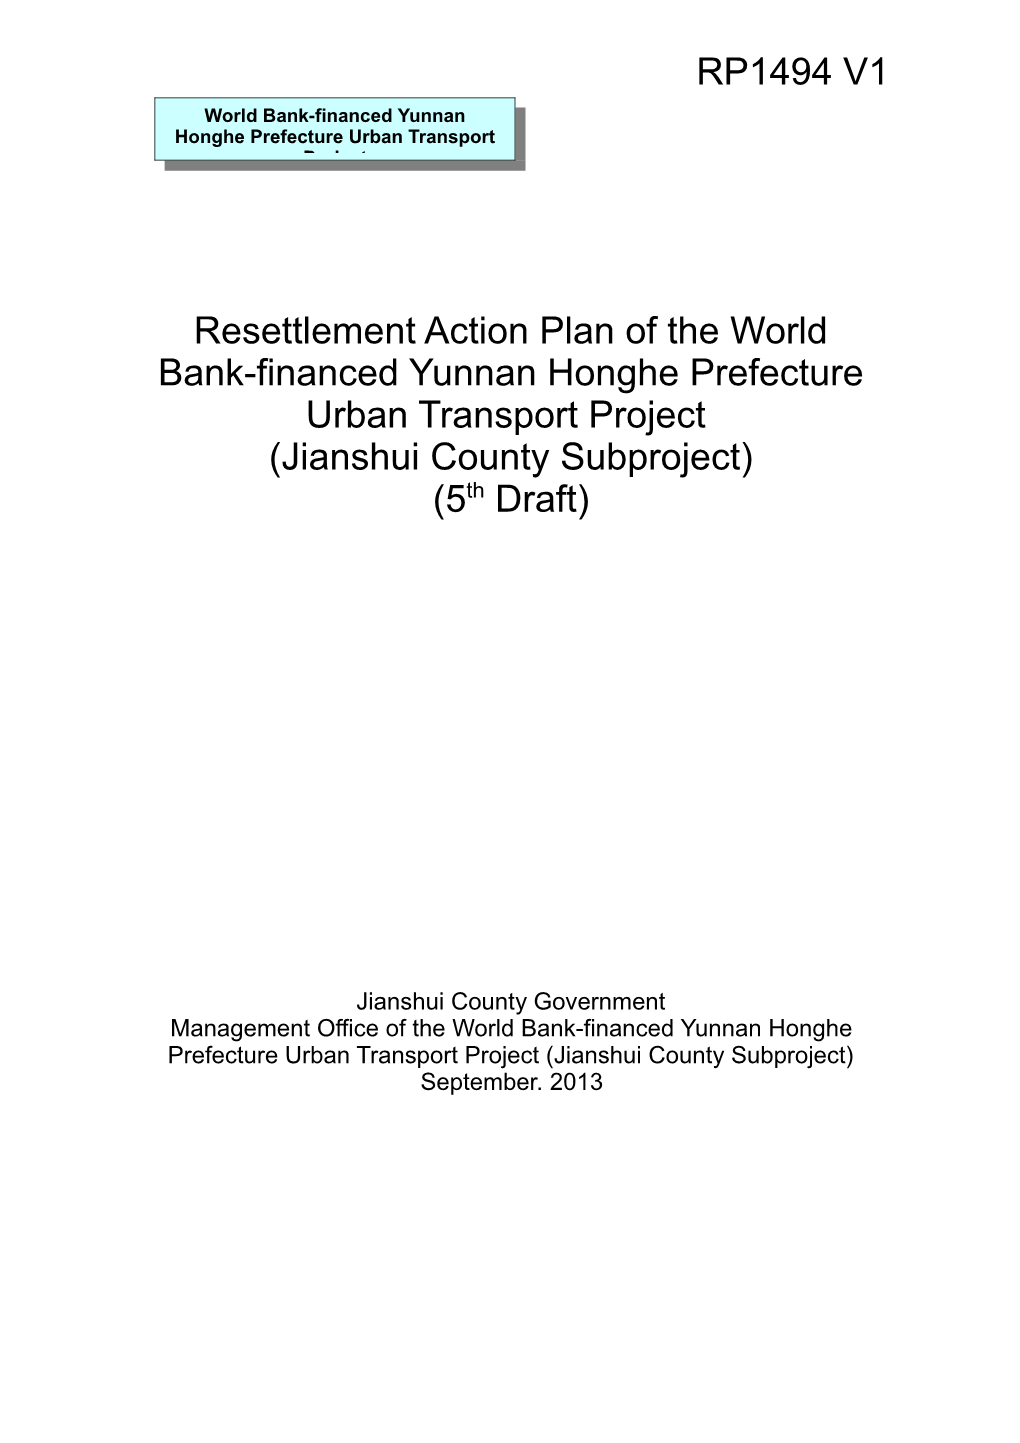 Resettlement Action Plan of the World Bank-Financed Yunnan Honghe Prefecture Urban Transport